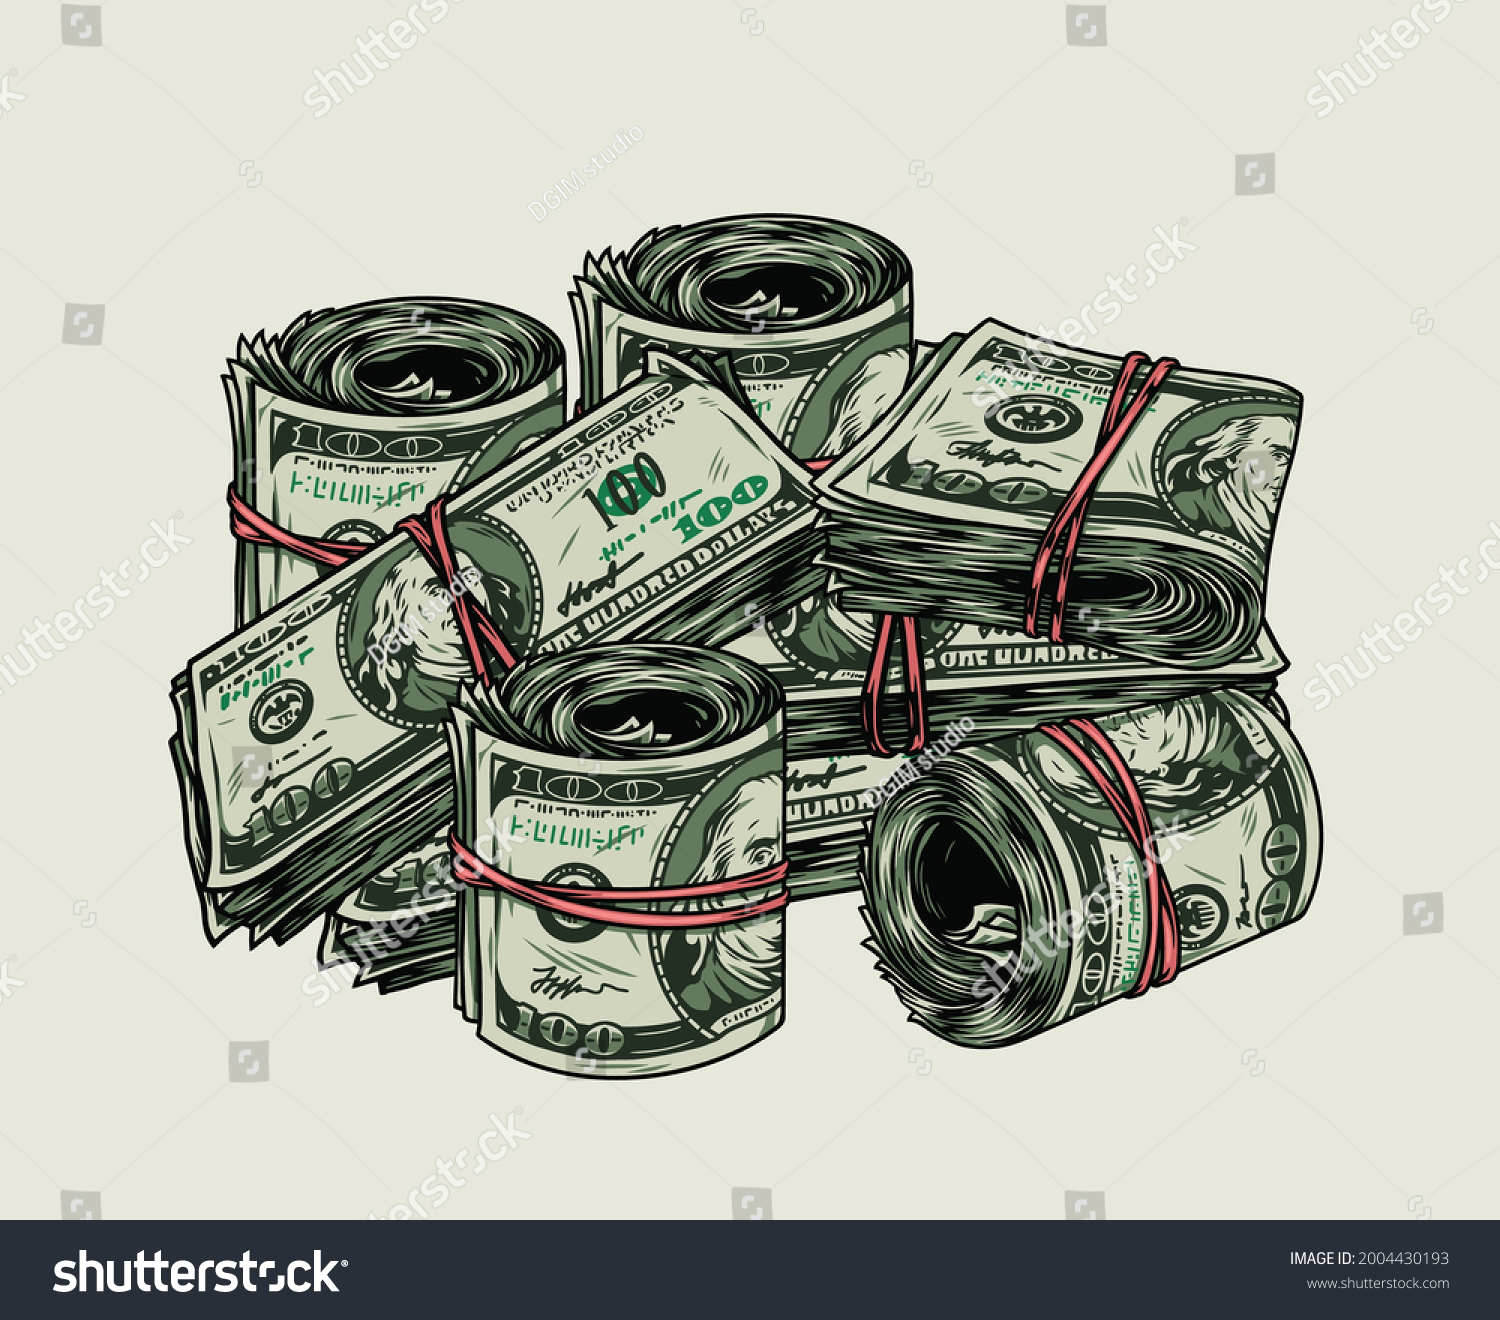 Money roll Images, Stock Photos & Vectors Shutterstock